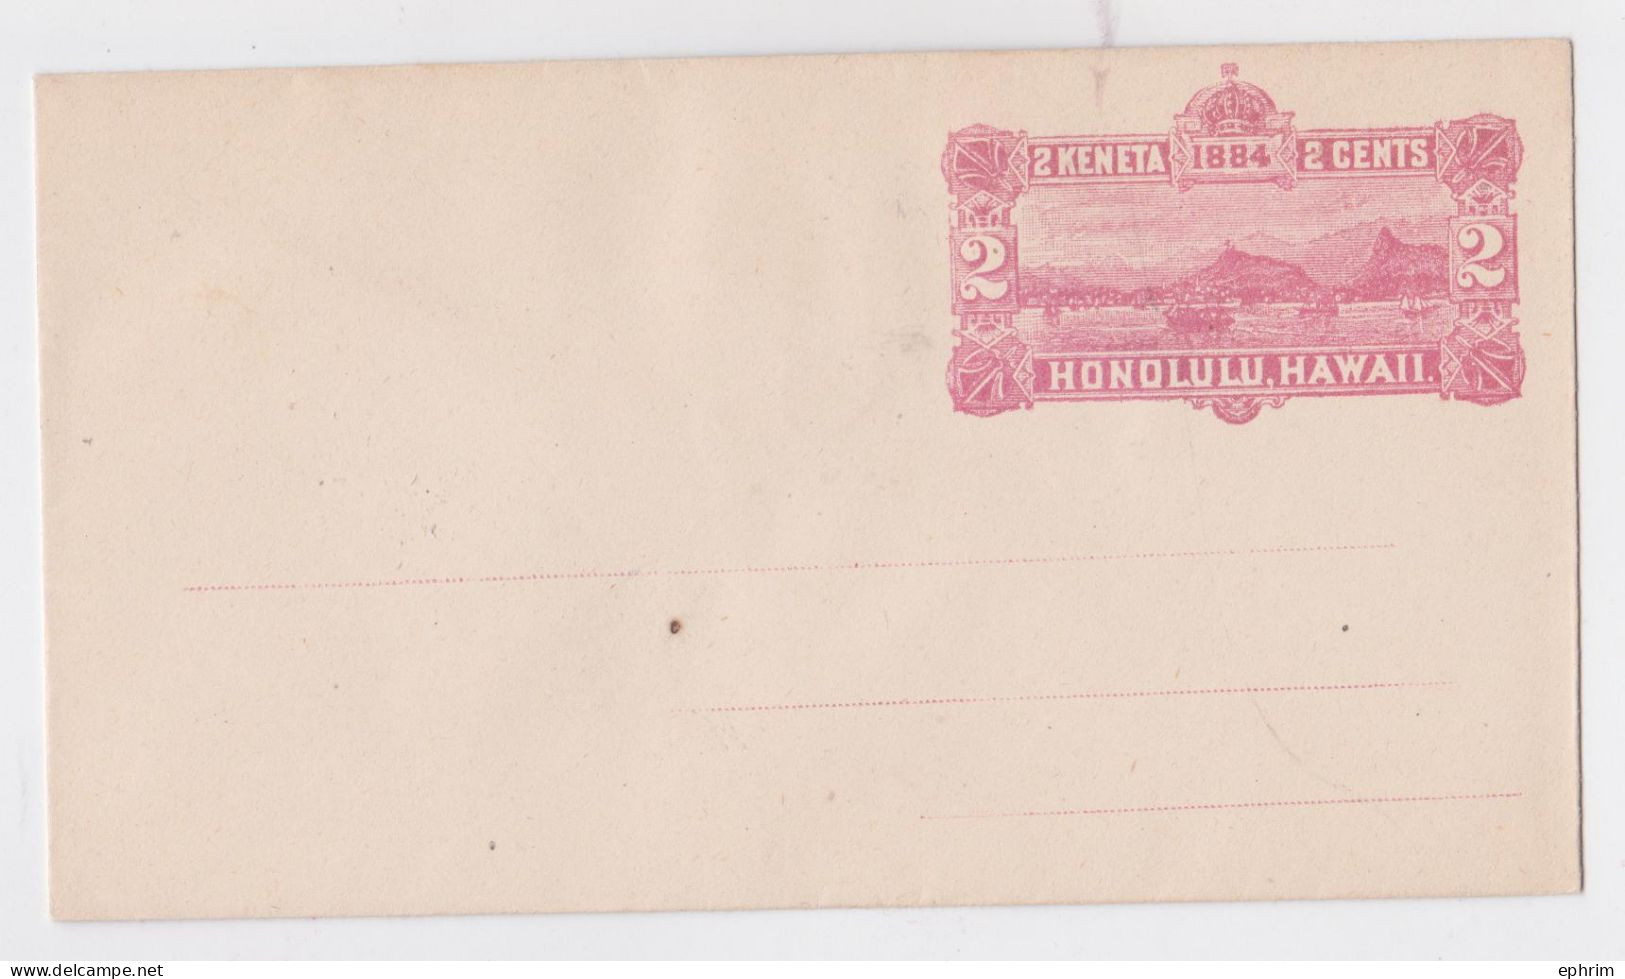 Honolulu Hawaii Hawaï Enveloppe Entier Postal Vierge Mint Postal Stationery Cover Letter Mail Red 2 Keneta Cents 1884 - Hawaii